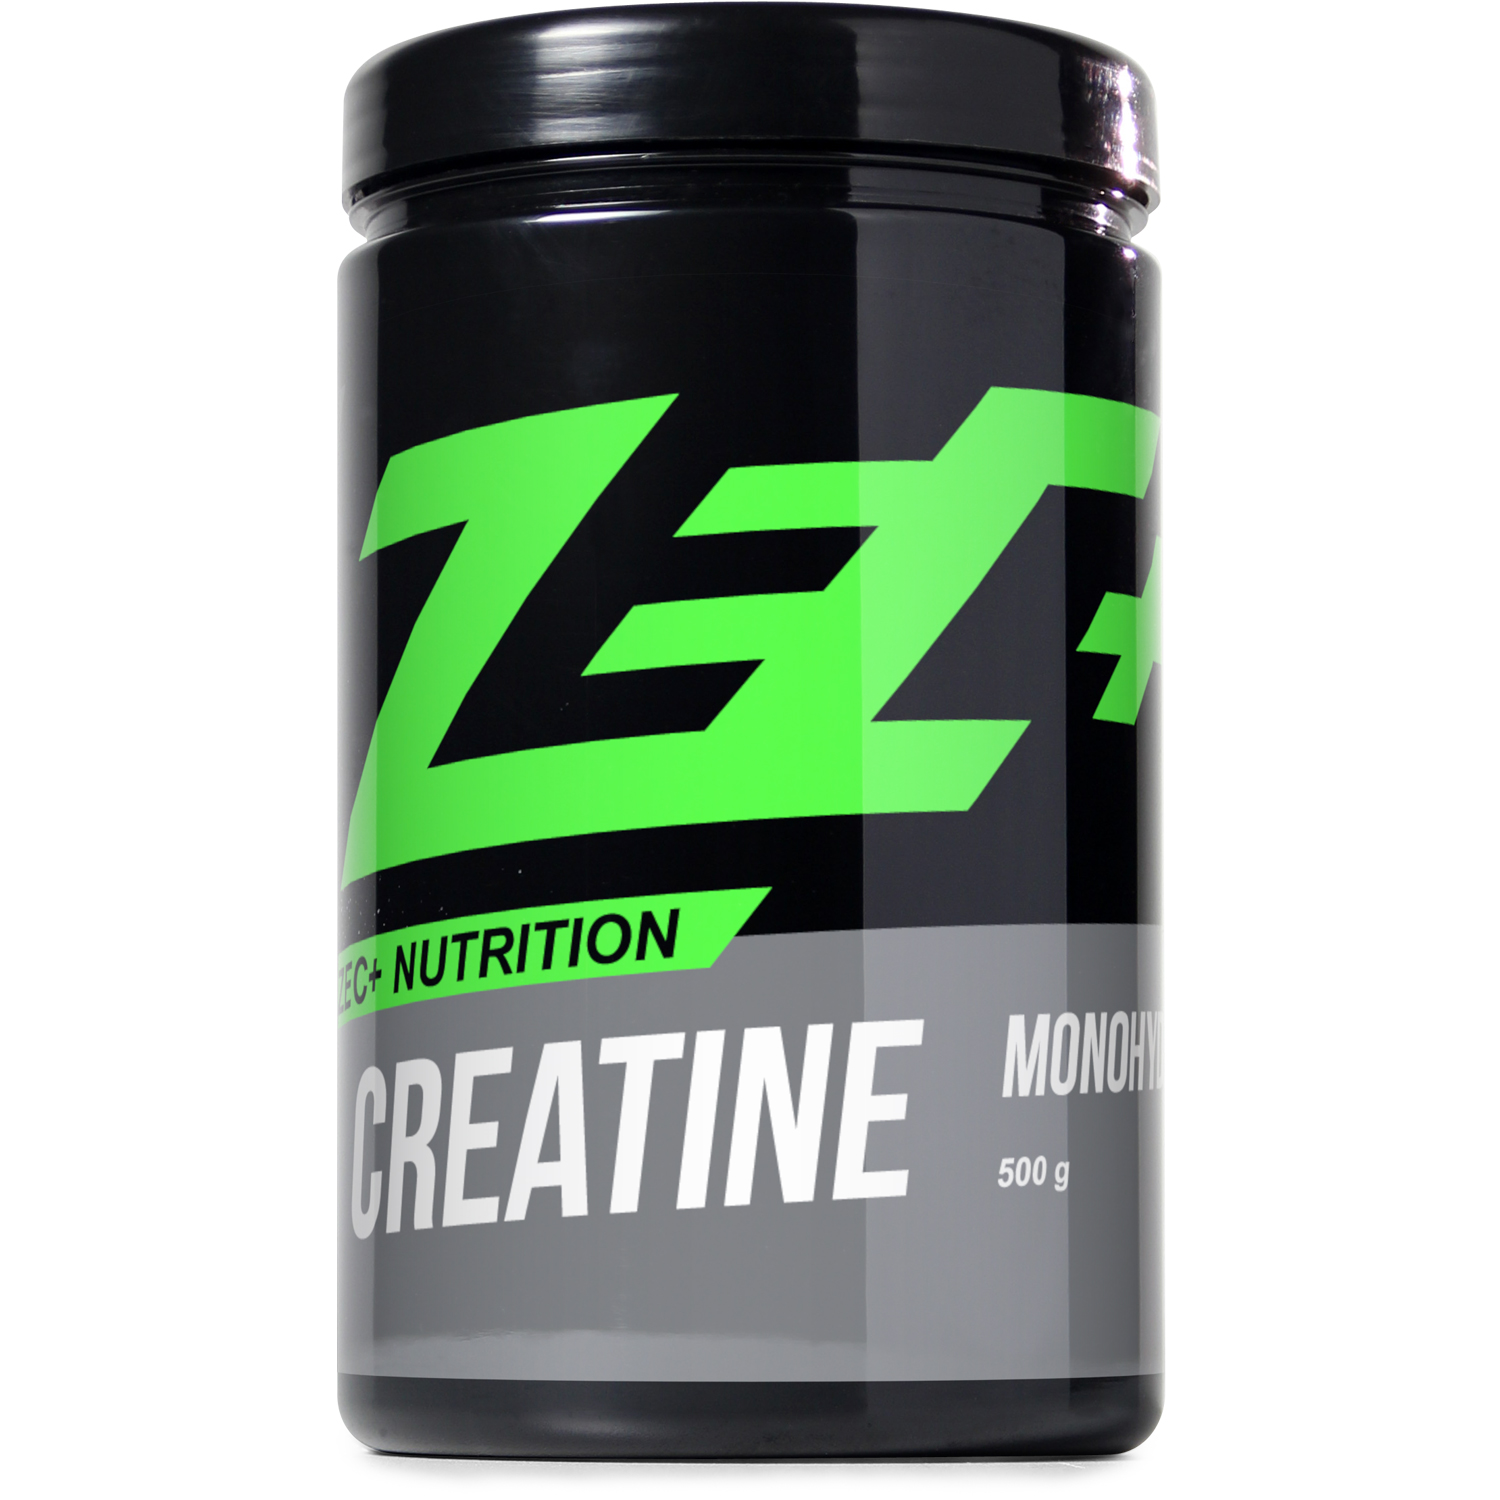 Zec+ Nutrition Creatine Monohydrate, 500g